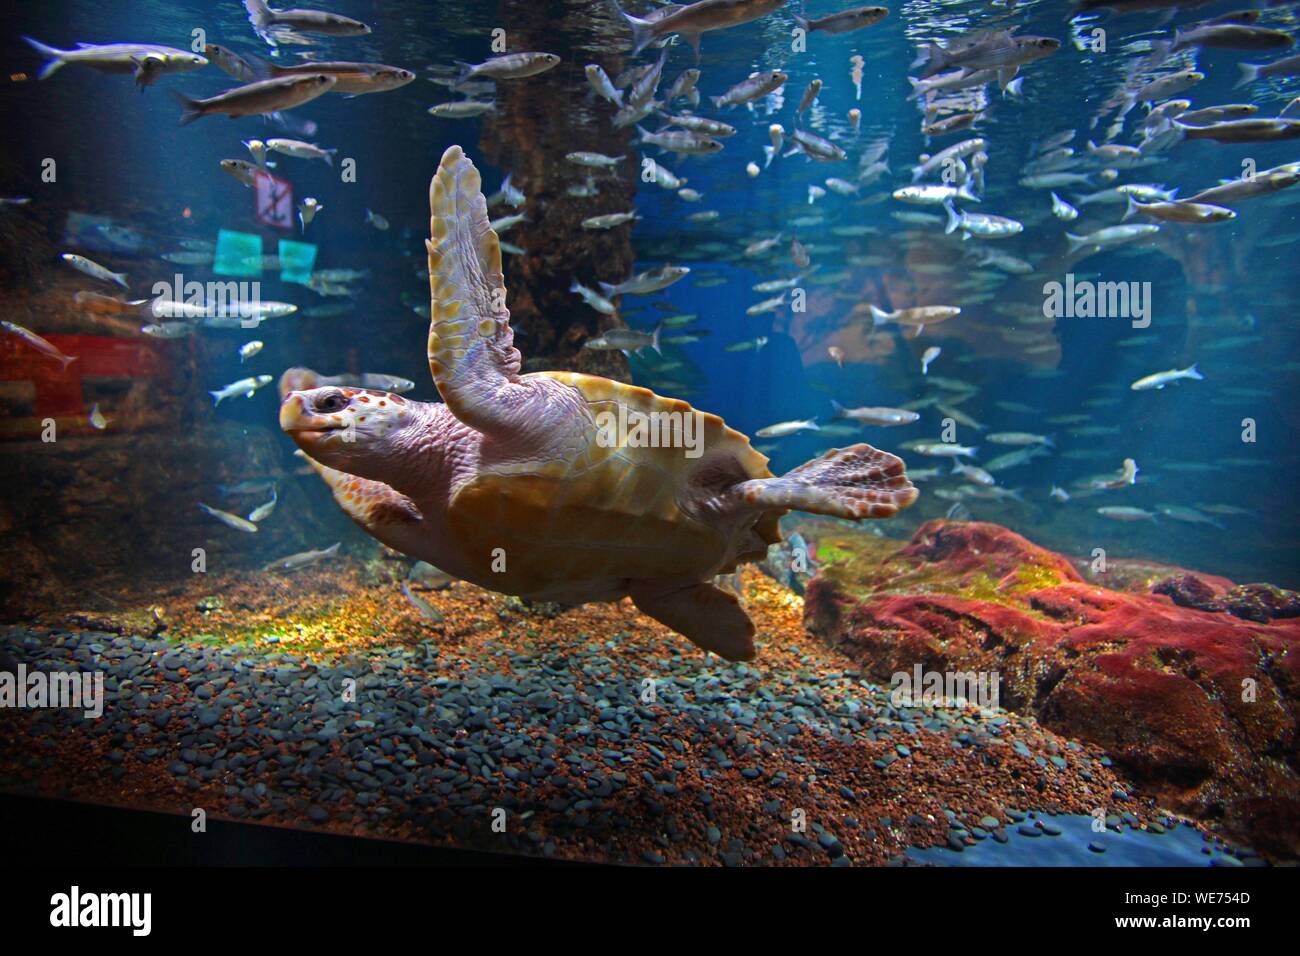 La France, Pas de Calais, Boulogne sur Mer, l'aquarium de Nausicaa, Centre National de la mer, l'étang de la tortue Banque D'Images